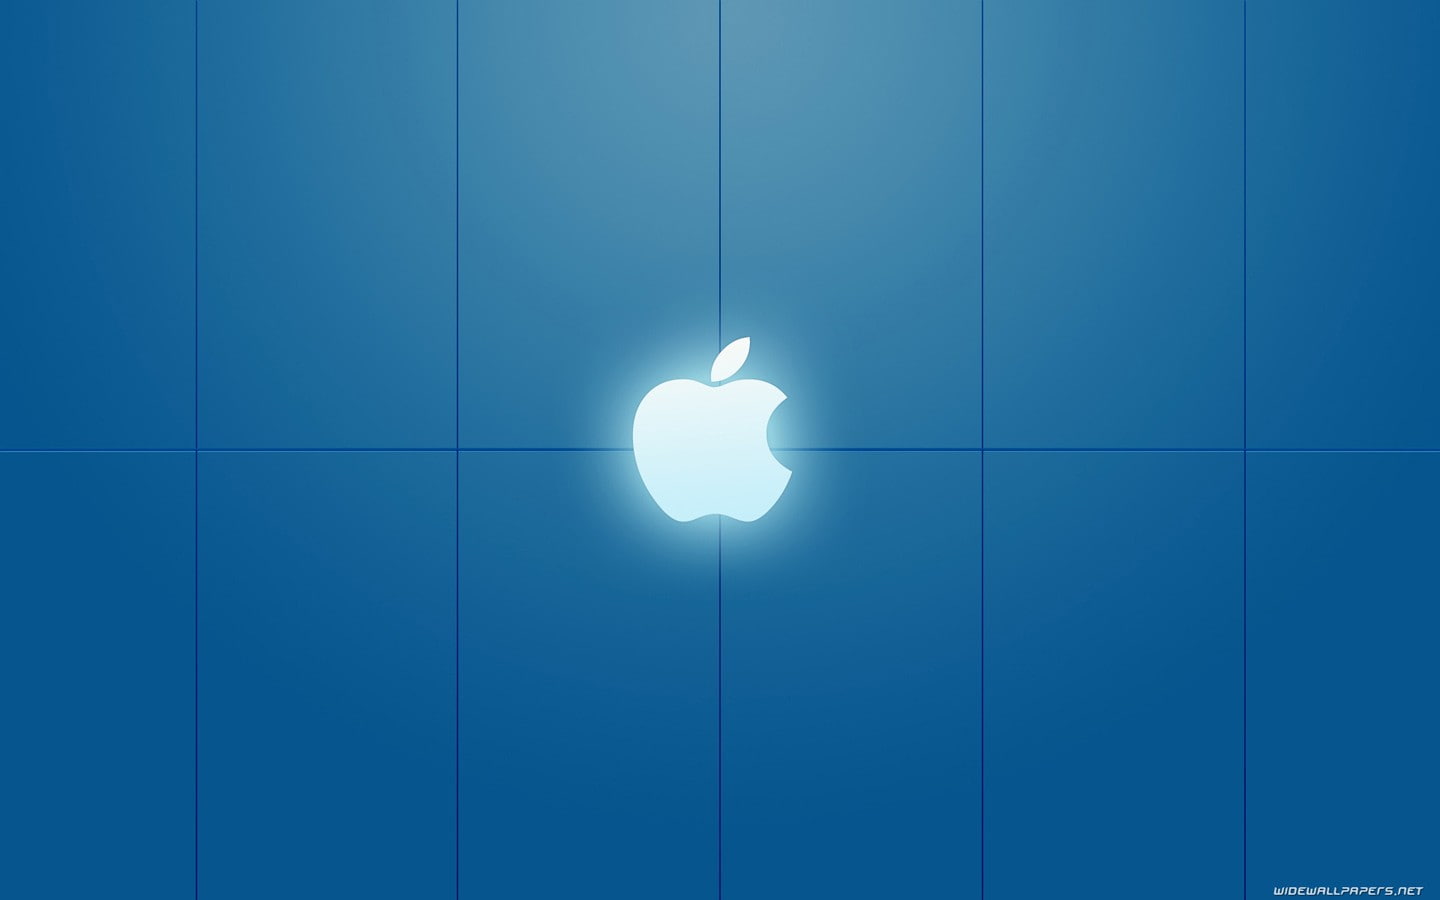 glowing, Apple Inc., logo, blue background, simple, digital art